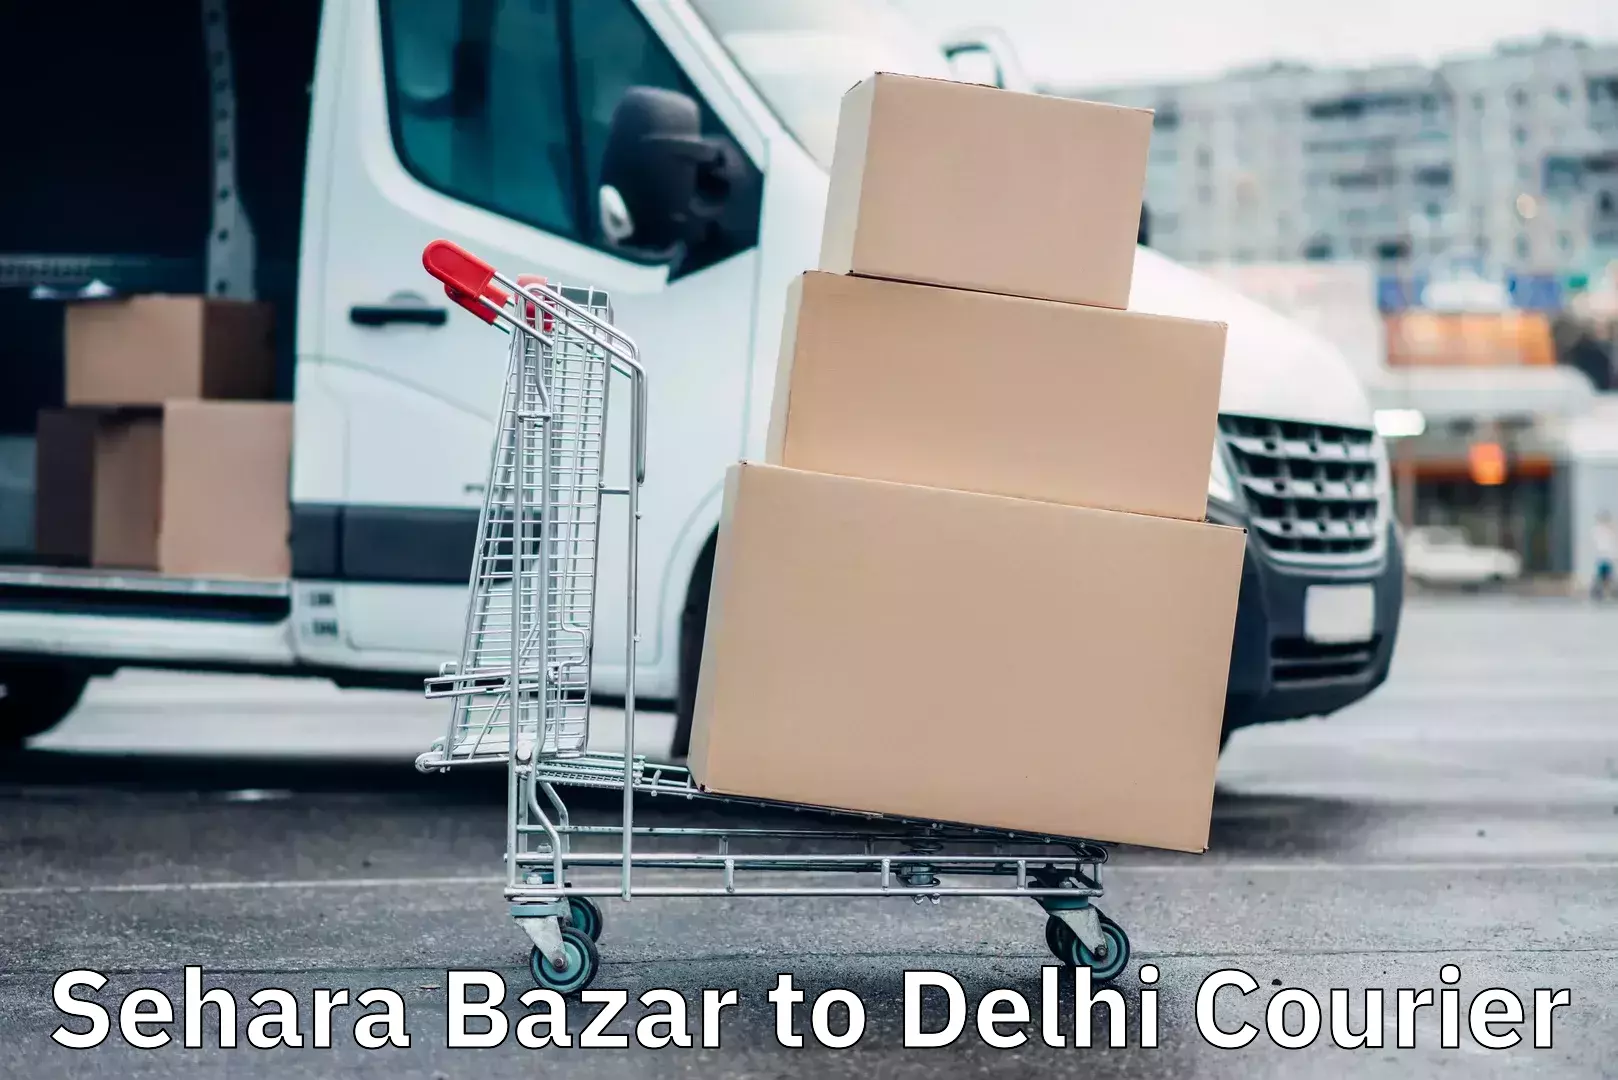 Easy return solutions Sehara Bazar to Delhi